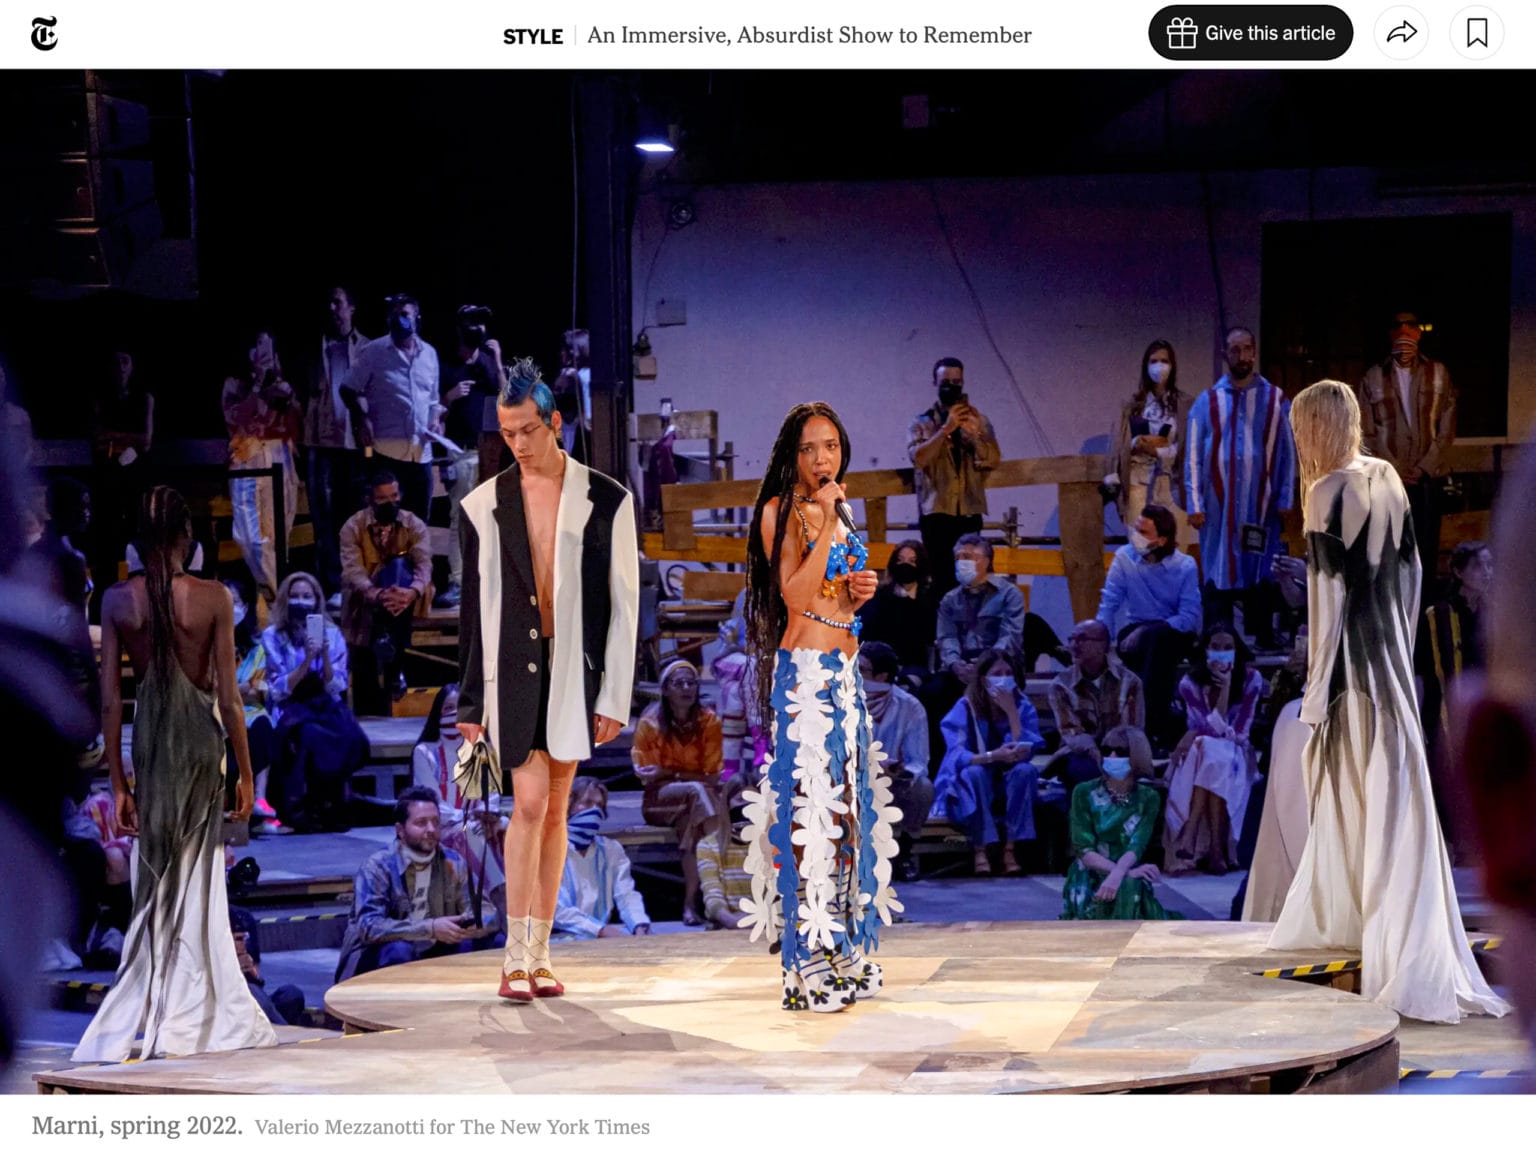 Marni Fashion Show, Photo by Valerio Mezzanotti for The New York Times